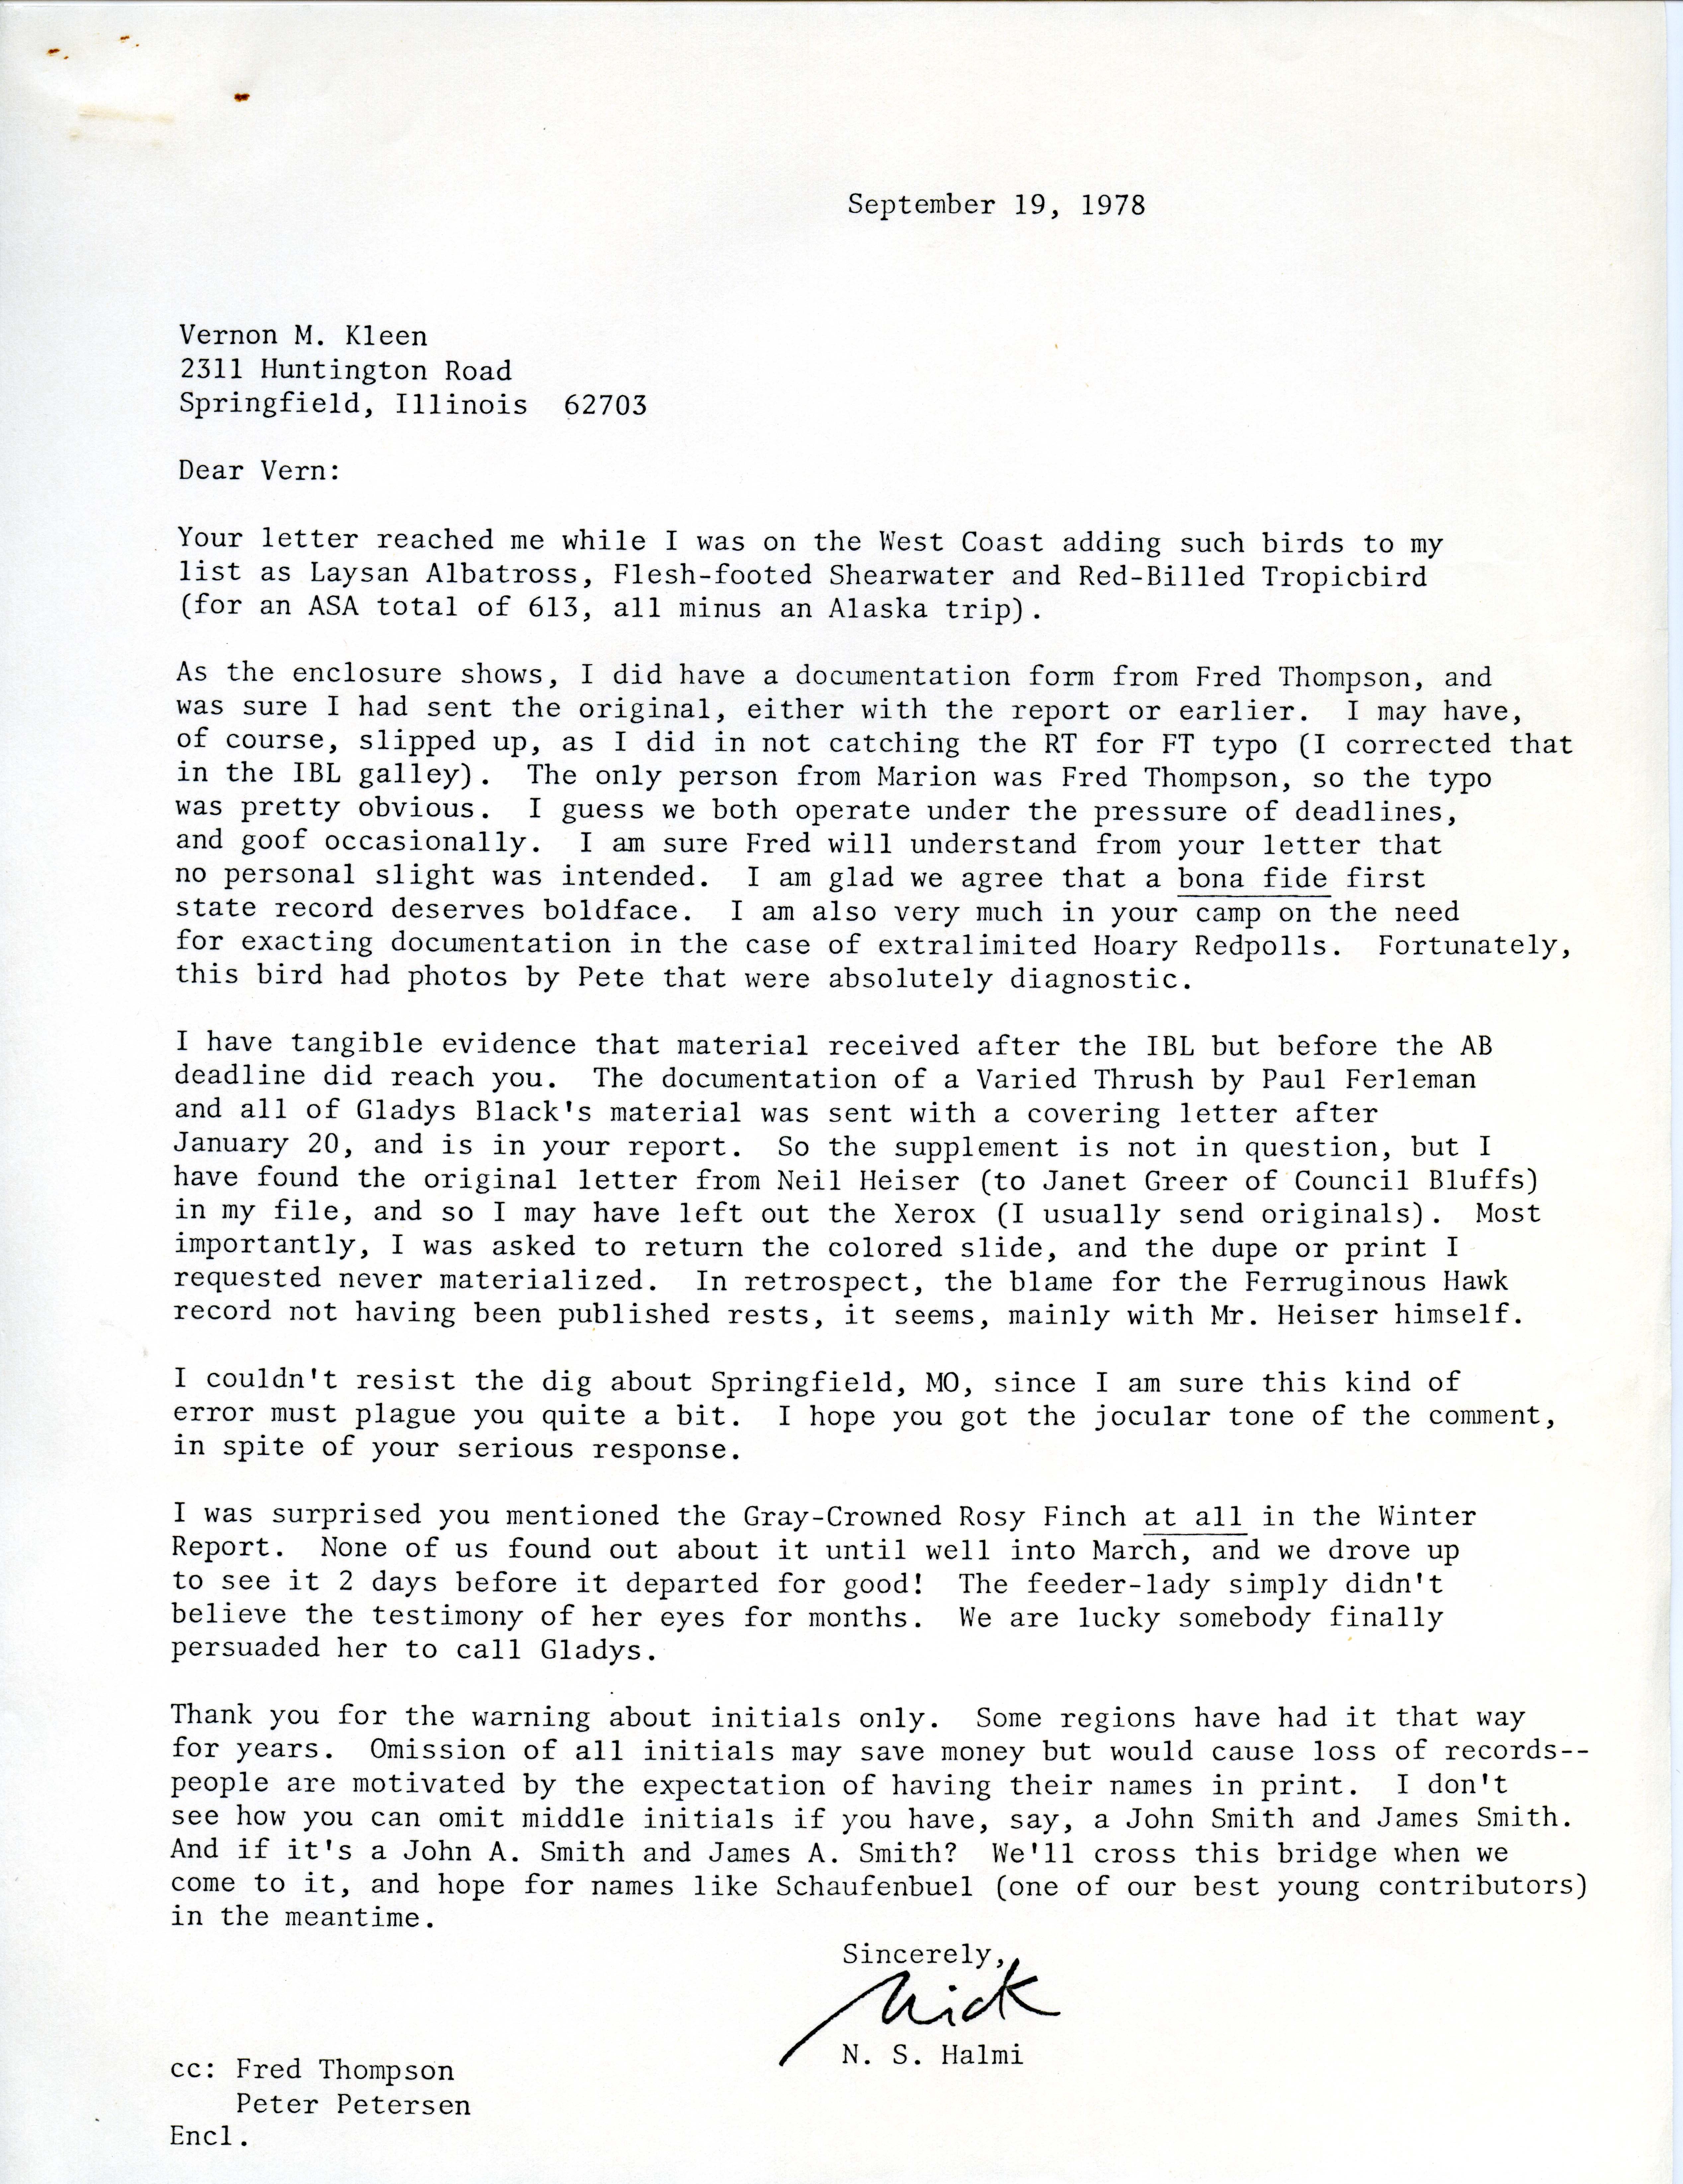 Nicholas S. Halmi letter to Vernon M. Kleen regarding publication of bird reports, September 19, 1978